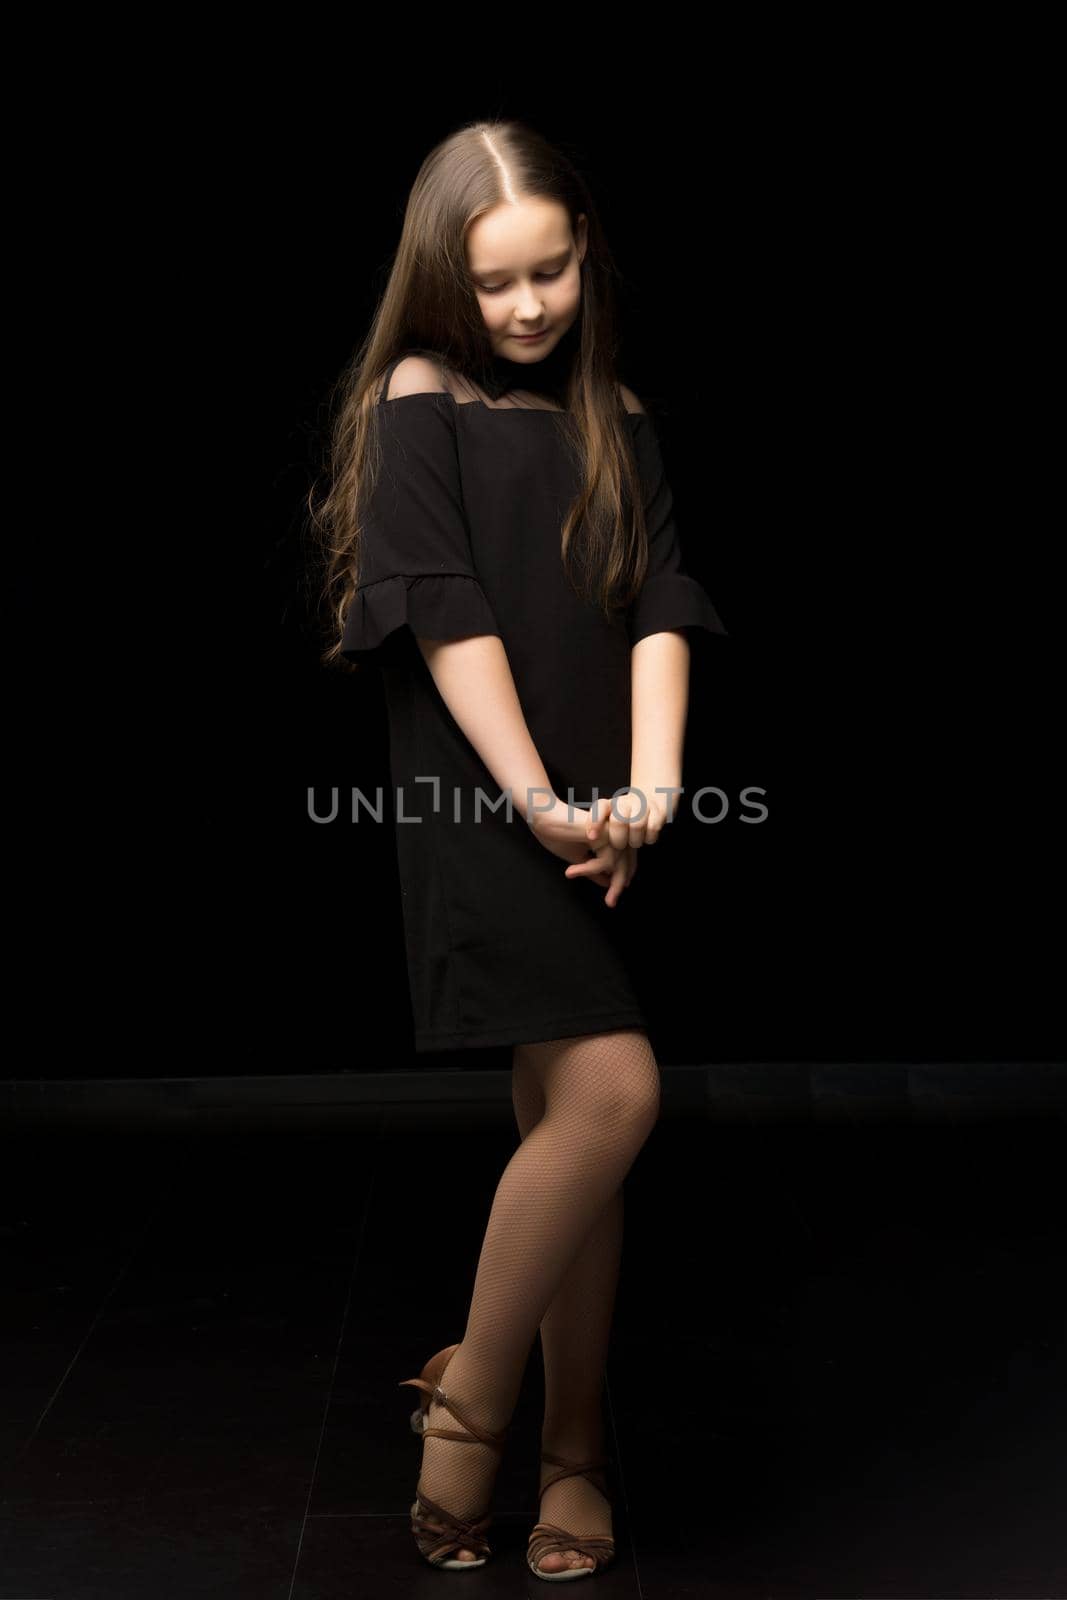 Cute little girl in a beautiful dress on a black background. by kolesnikov_studio